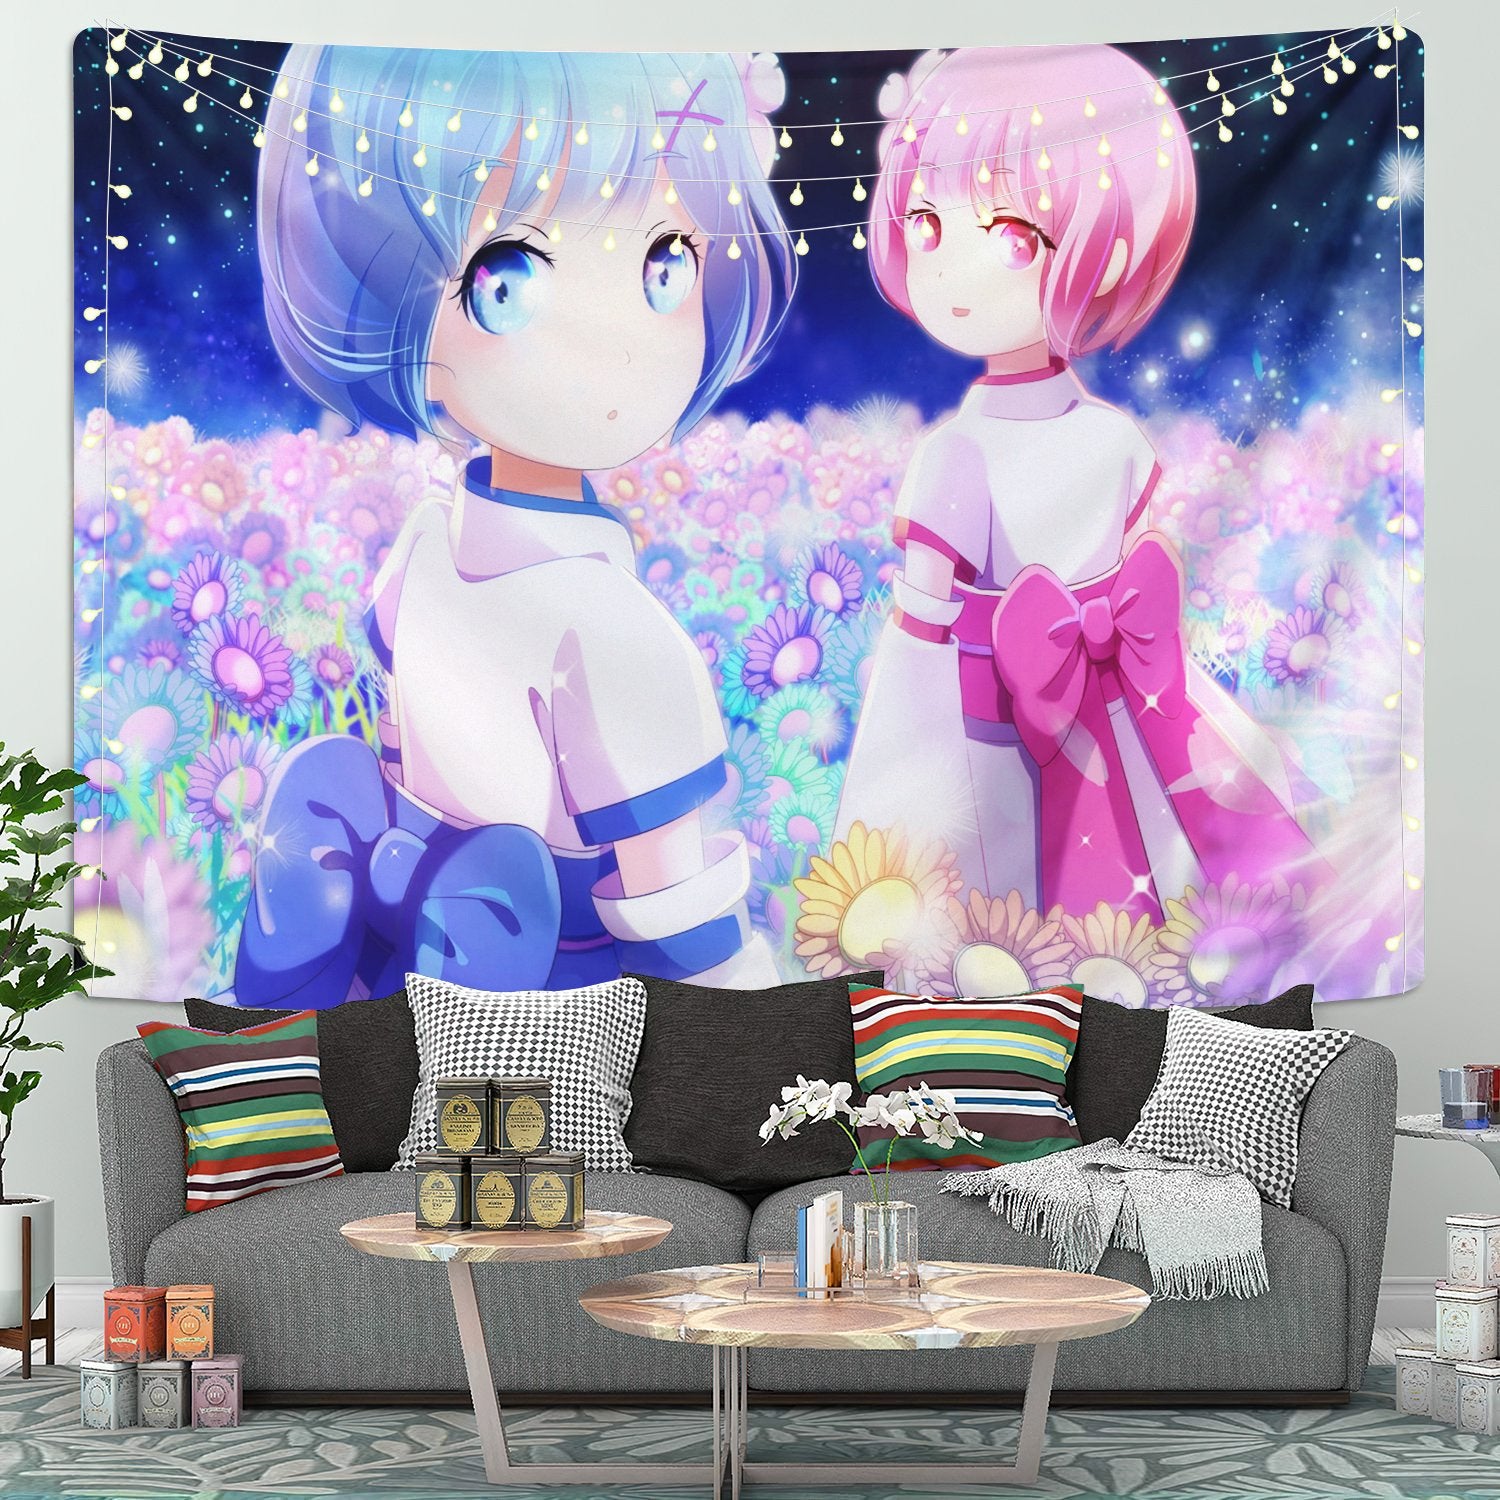 Ram And Rem ReZero Anime Tapestry Room Decor